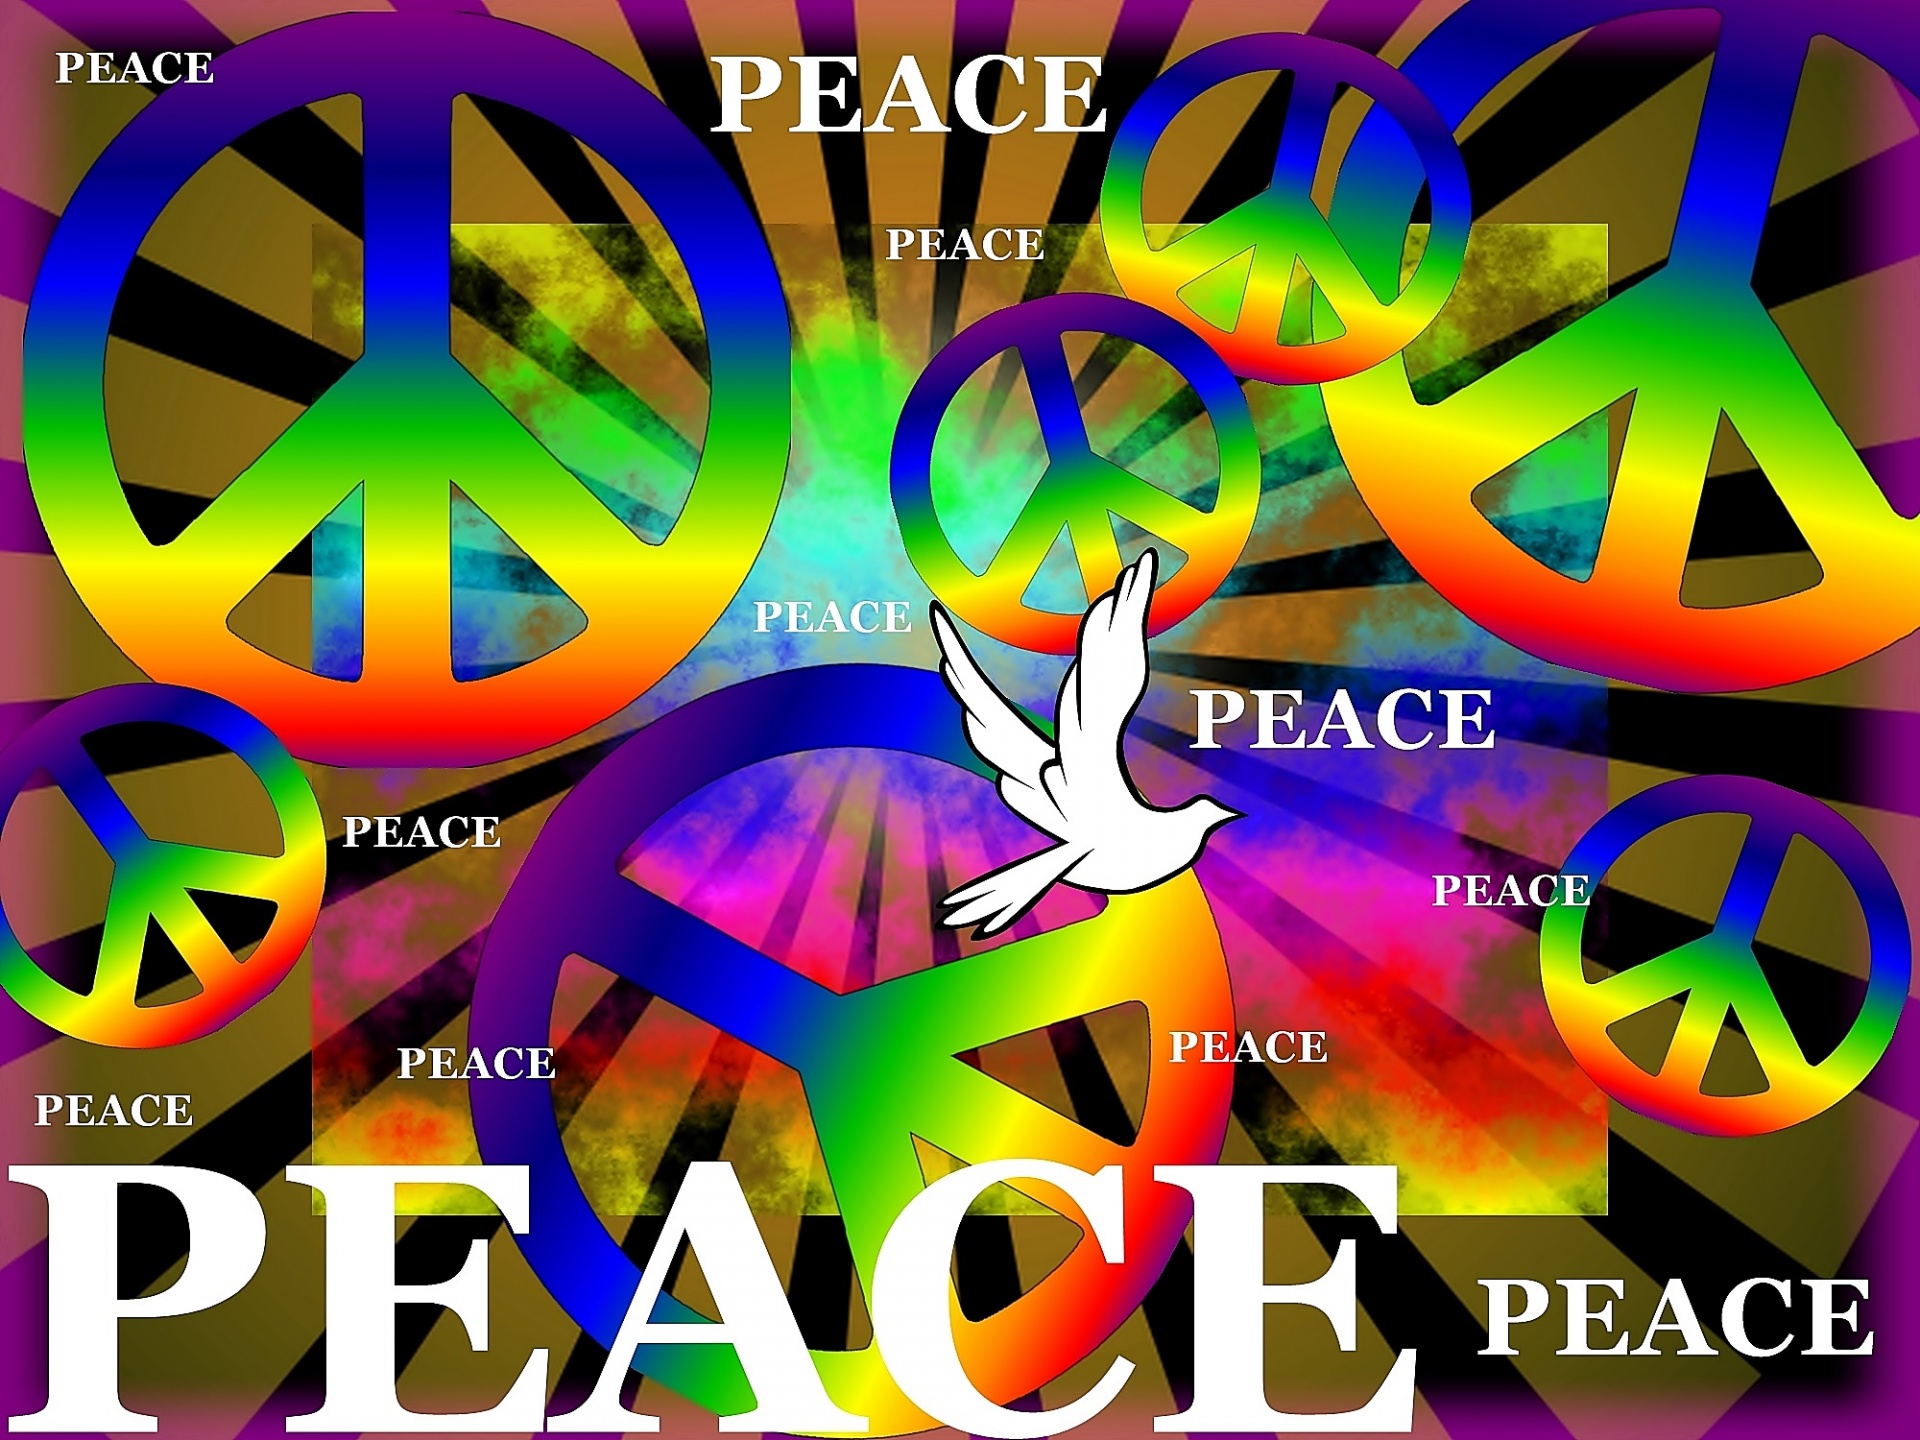 La paz mundial